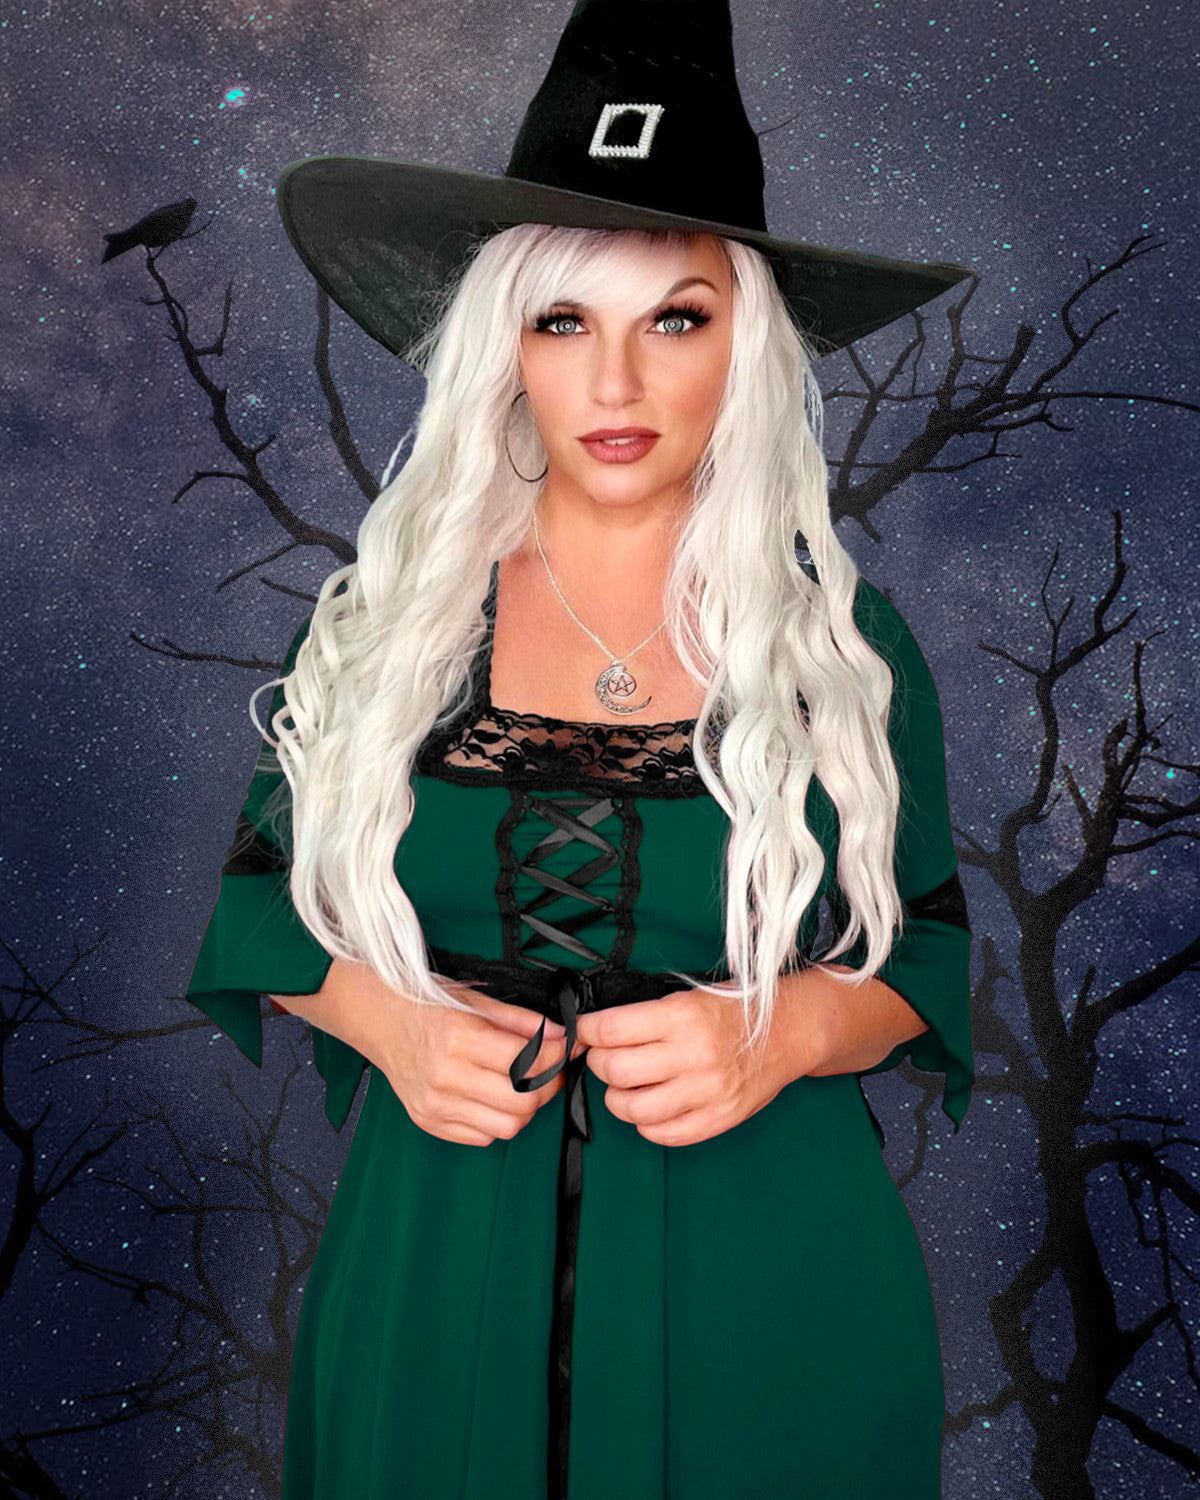 Dare Fashion Adult Gothic Witch Costume Renaissance Corset Dress Envy Green